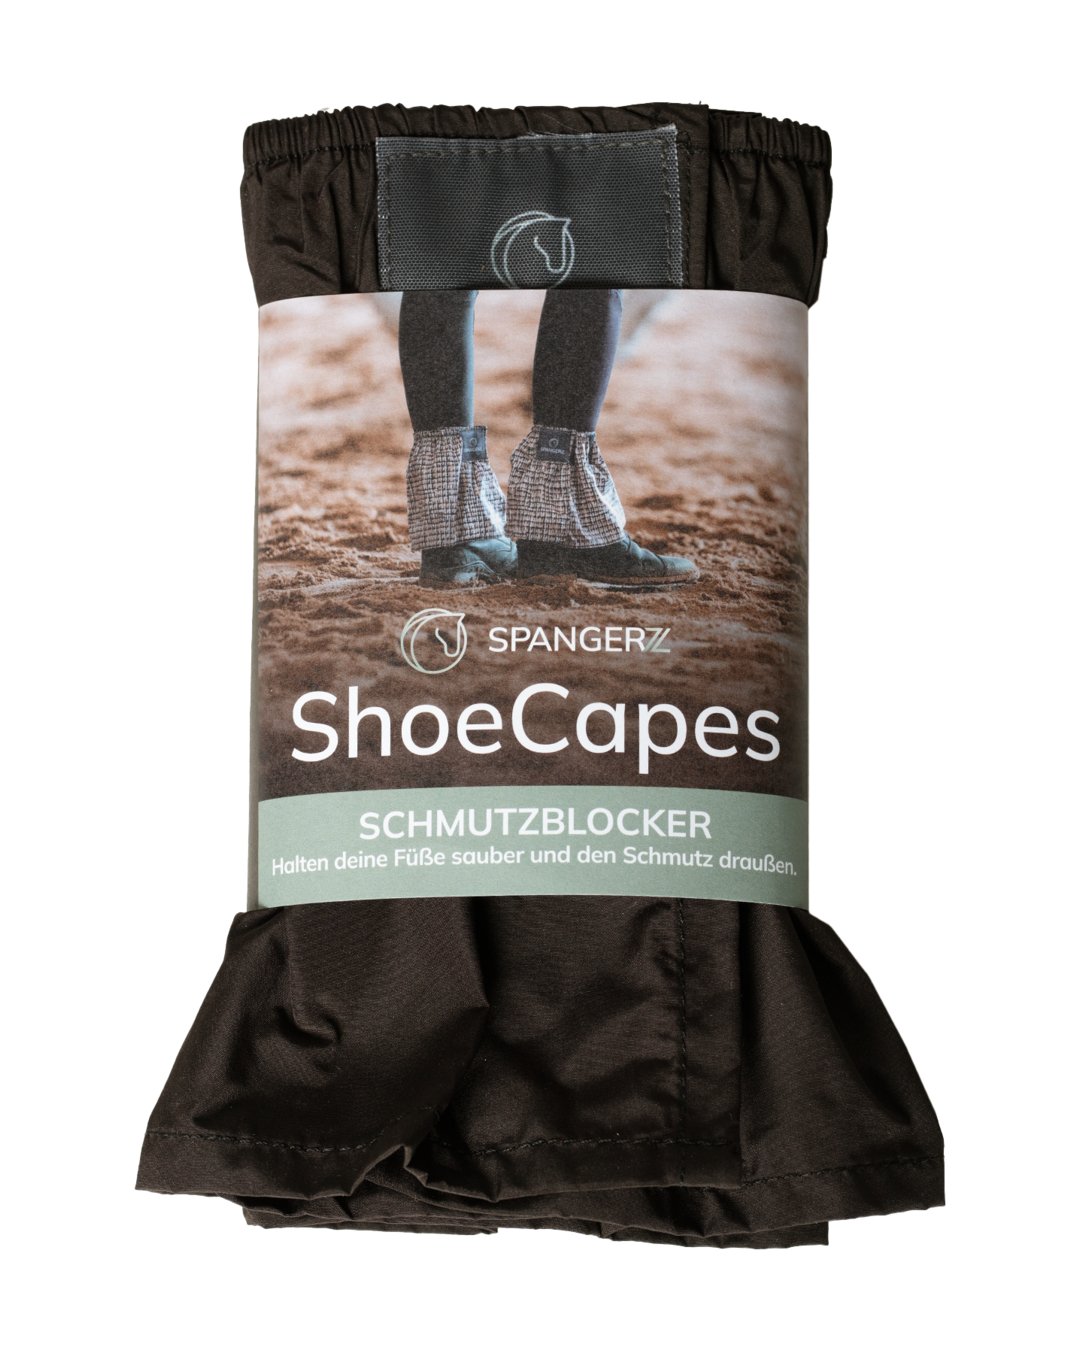 Schmutzblocker ShoeCapes